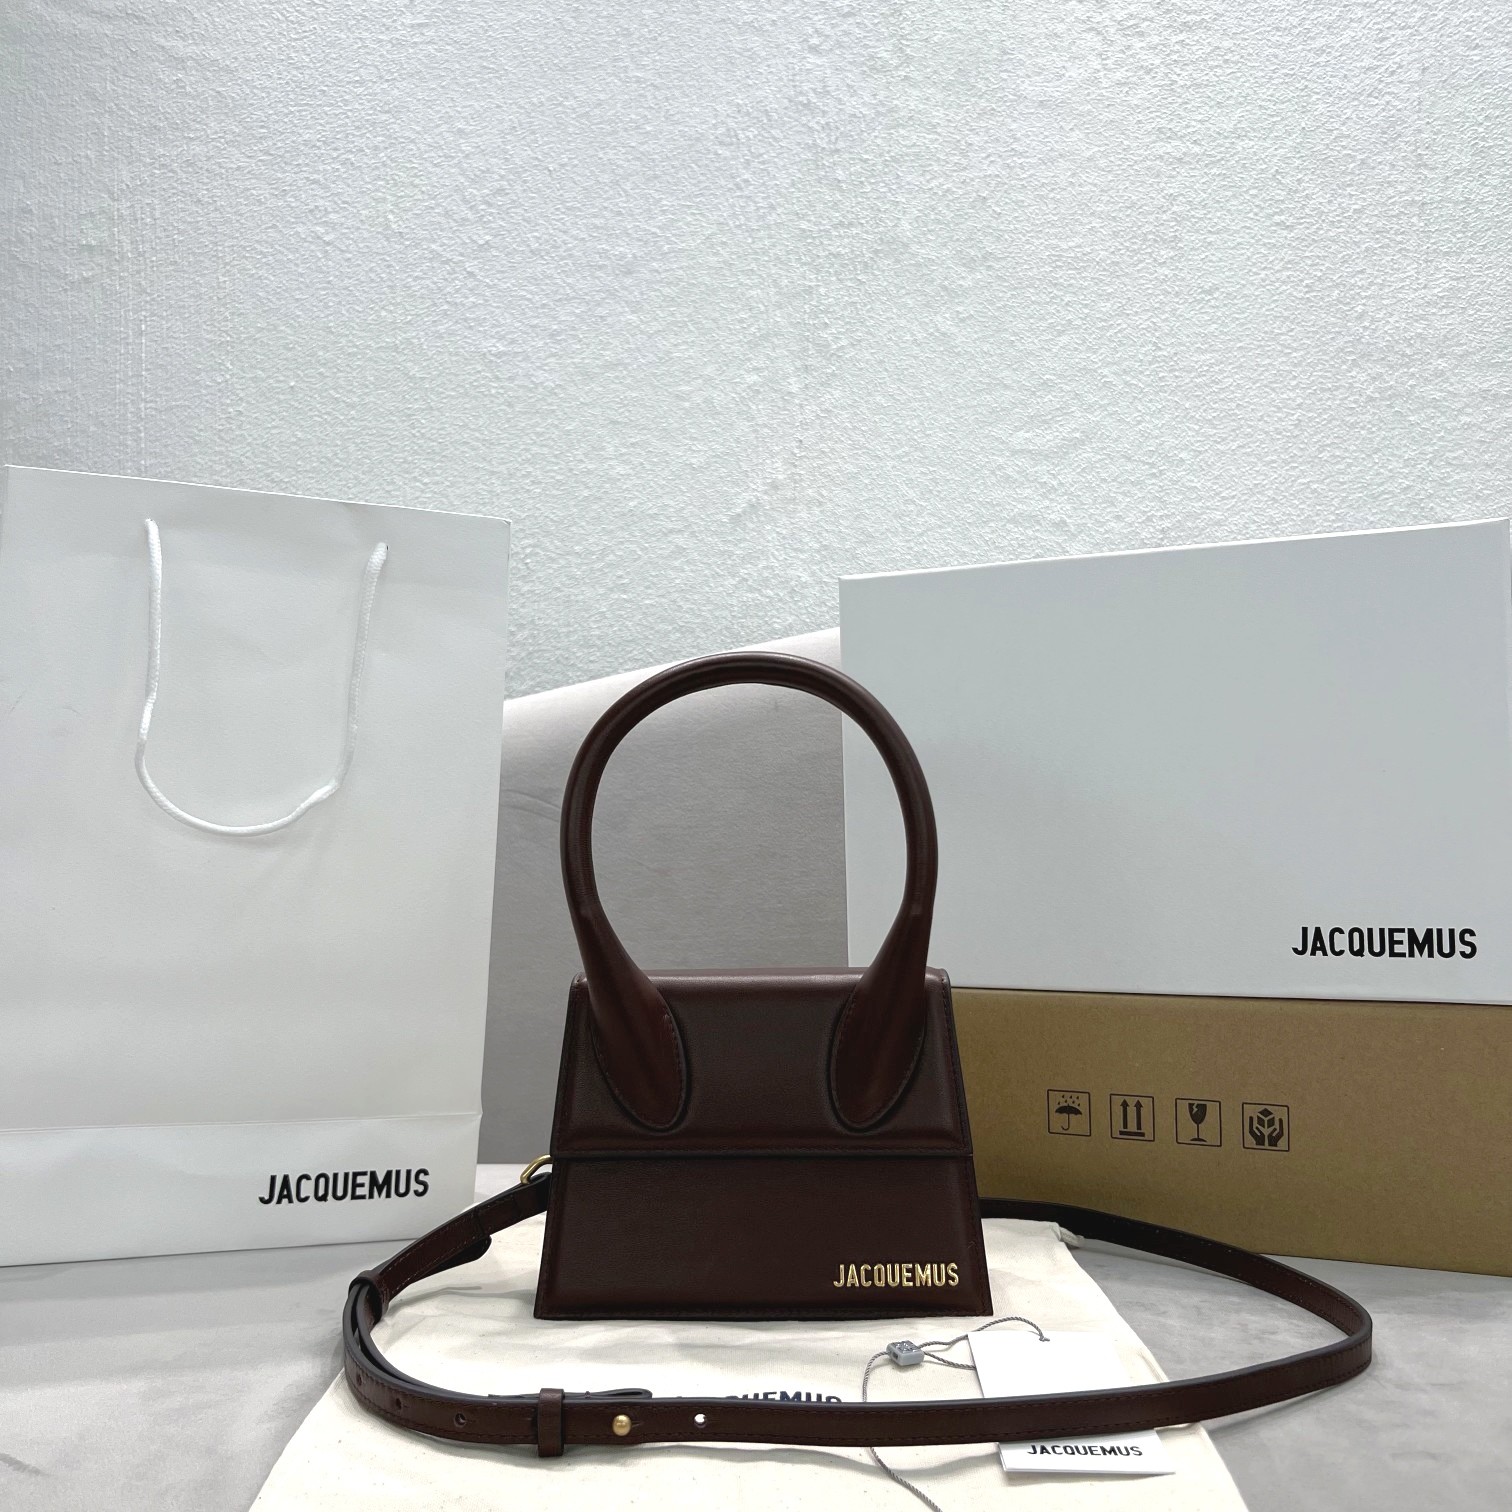 Jacquemus Bags Handbags for sale cheap now
 Chocolate color Gold Vintage